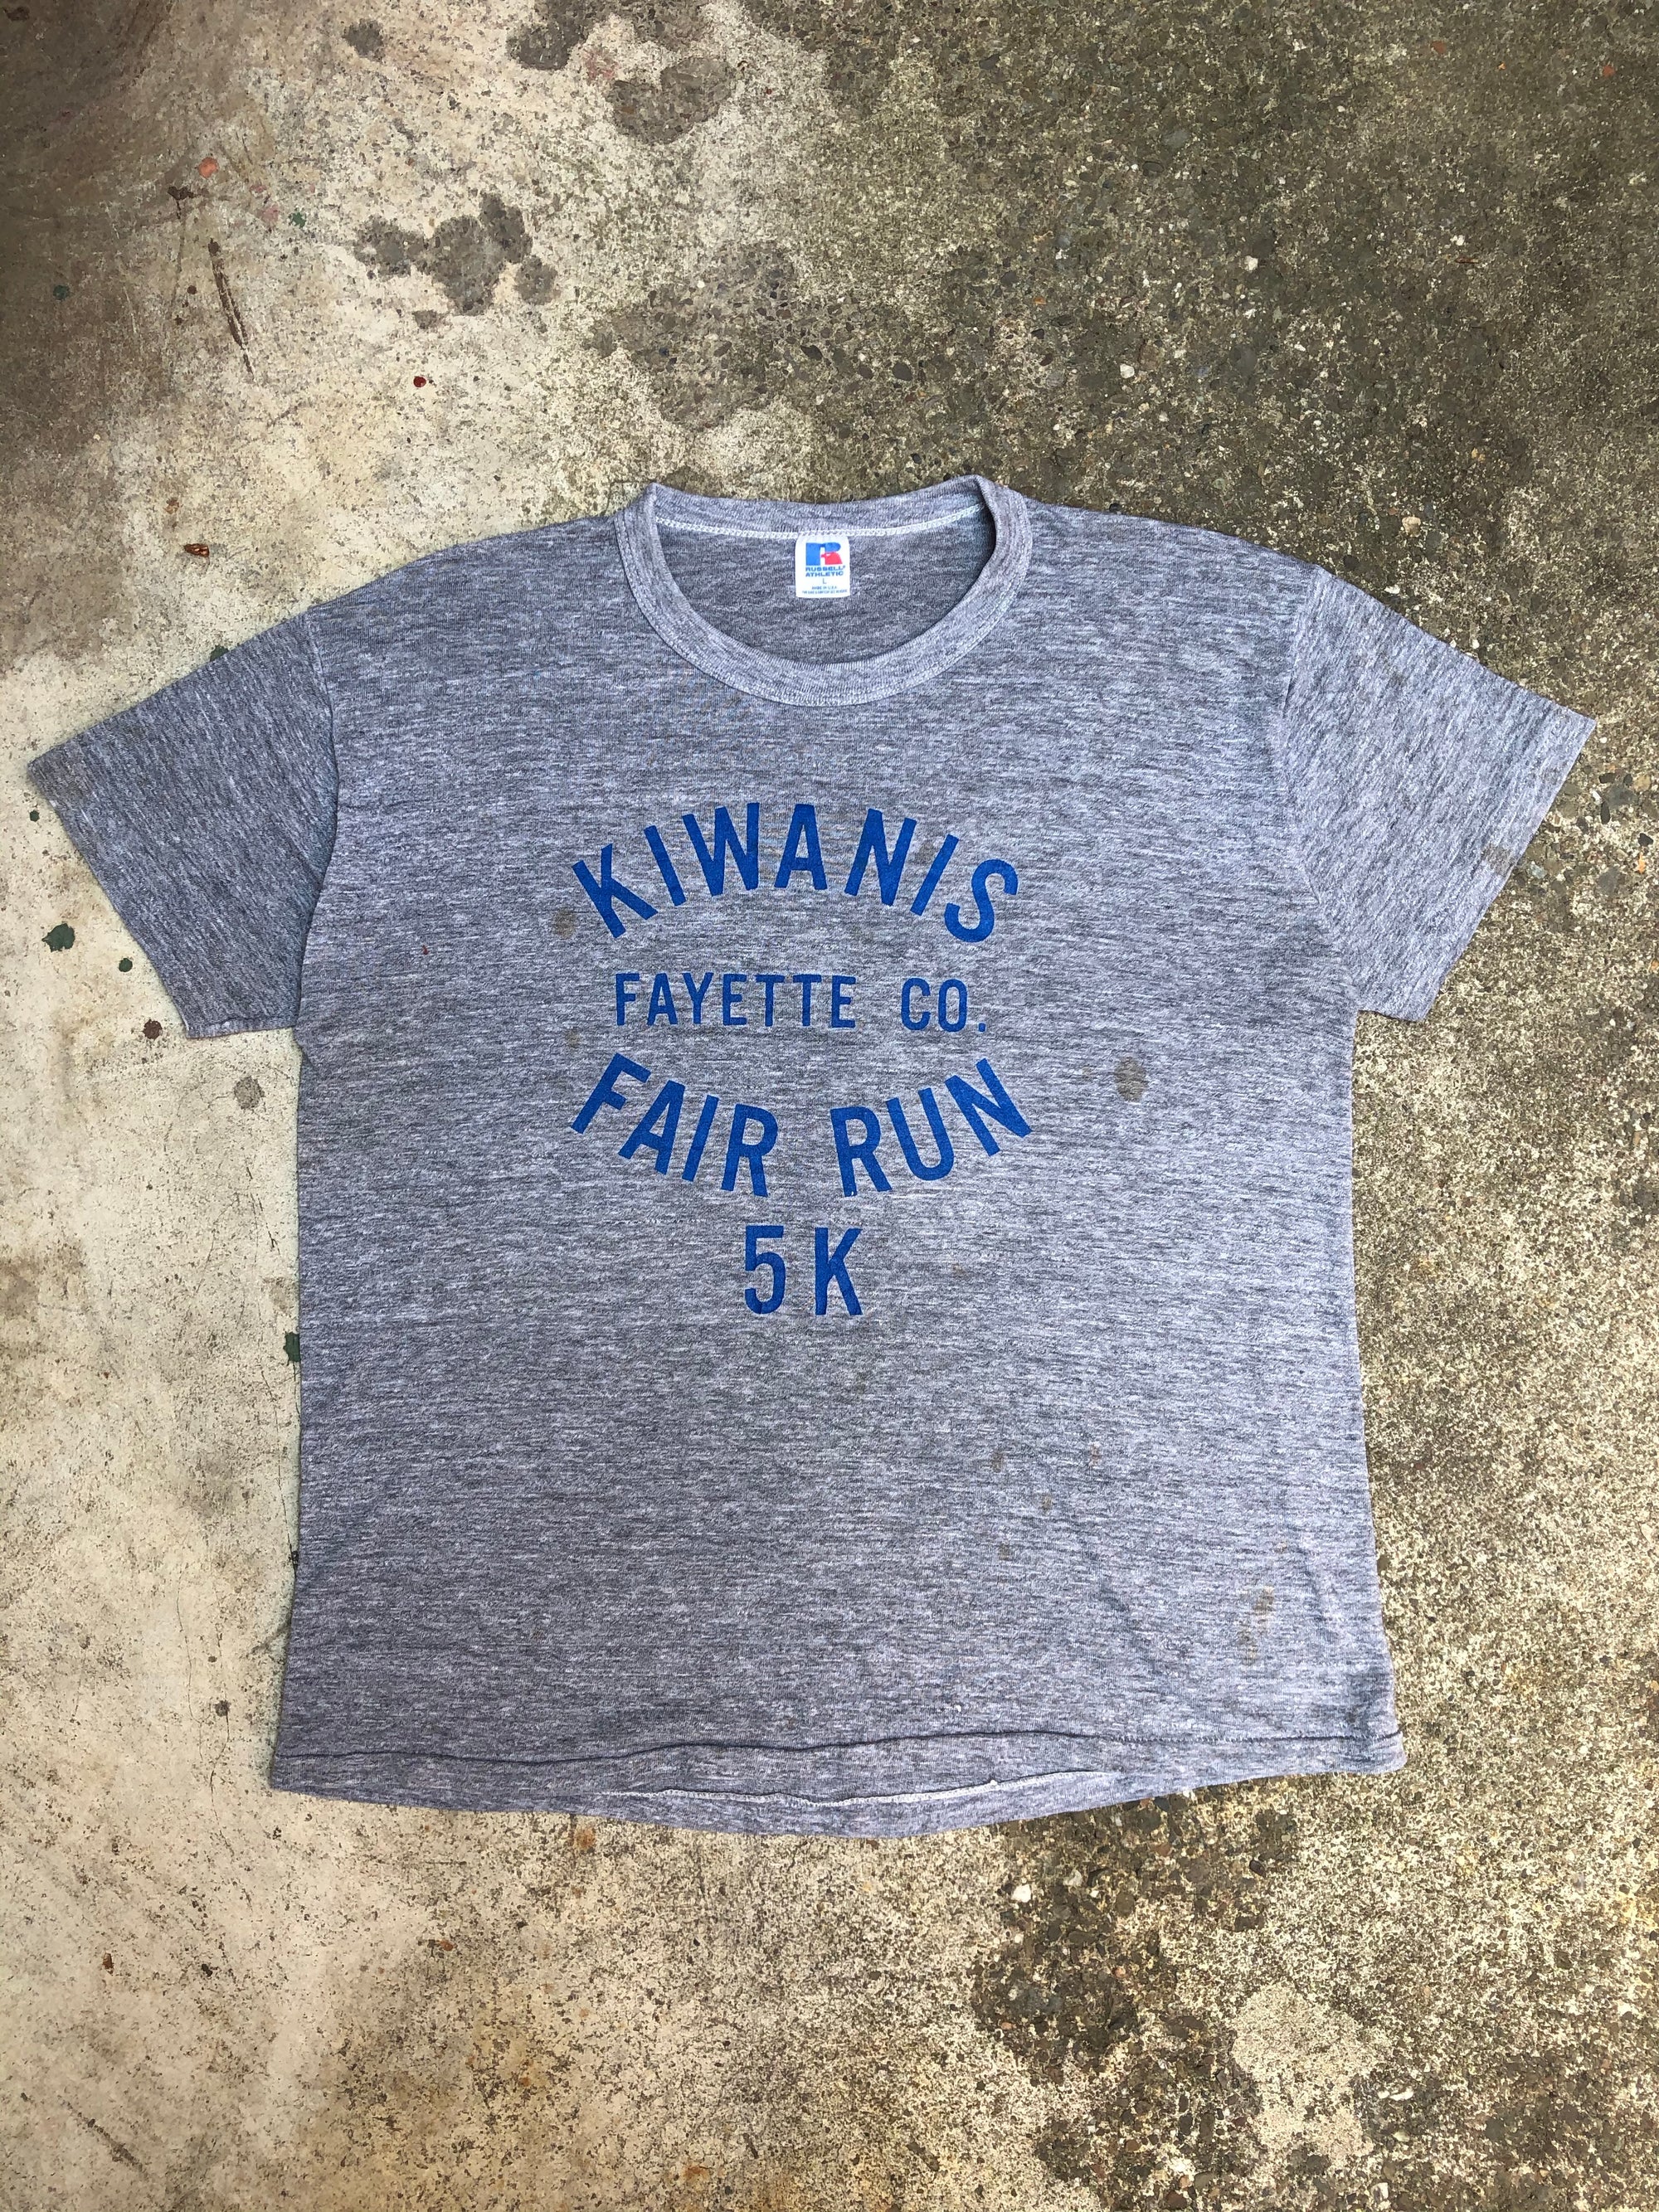 1990s Single Stitched “Kiwanis Fair Run 5K” Tee